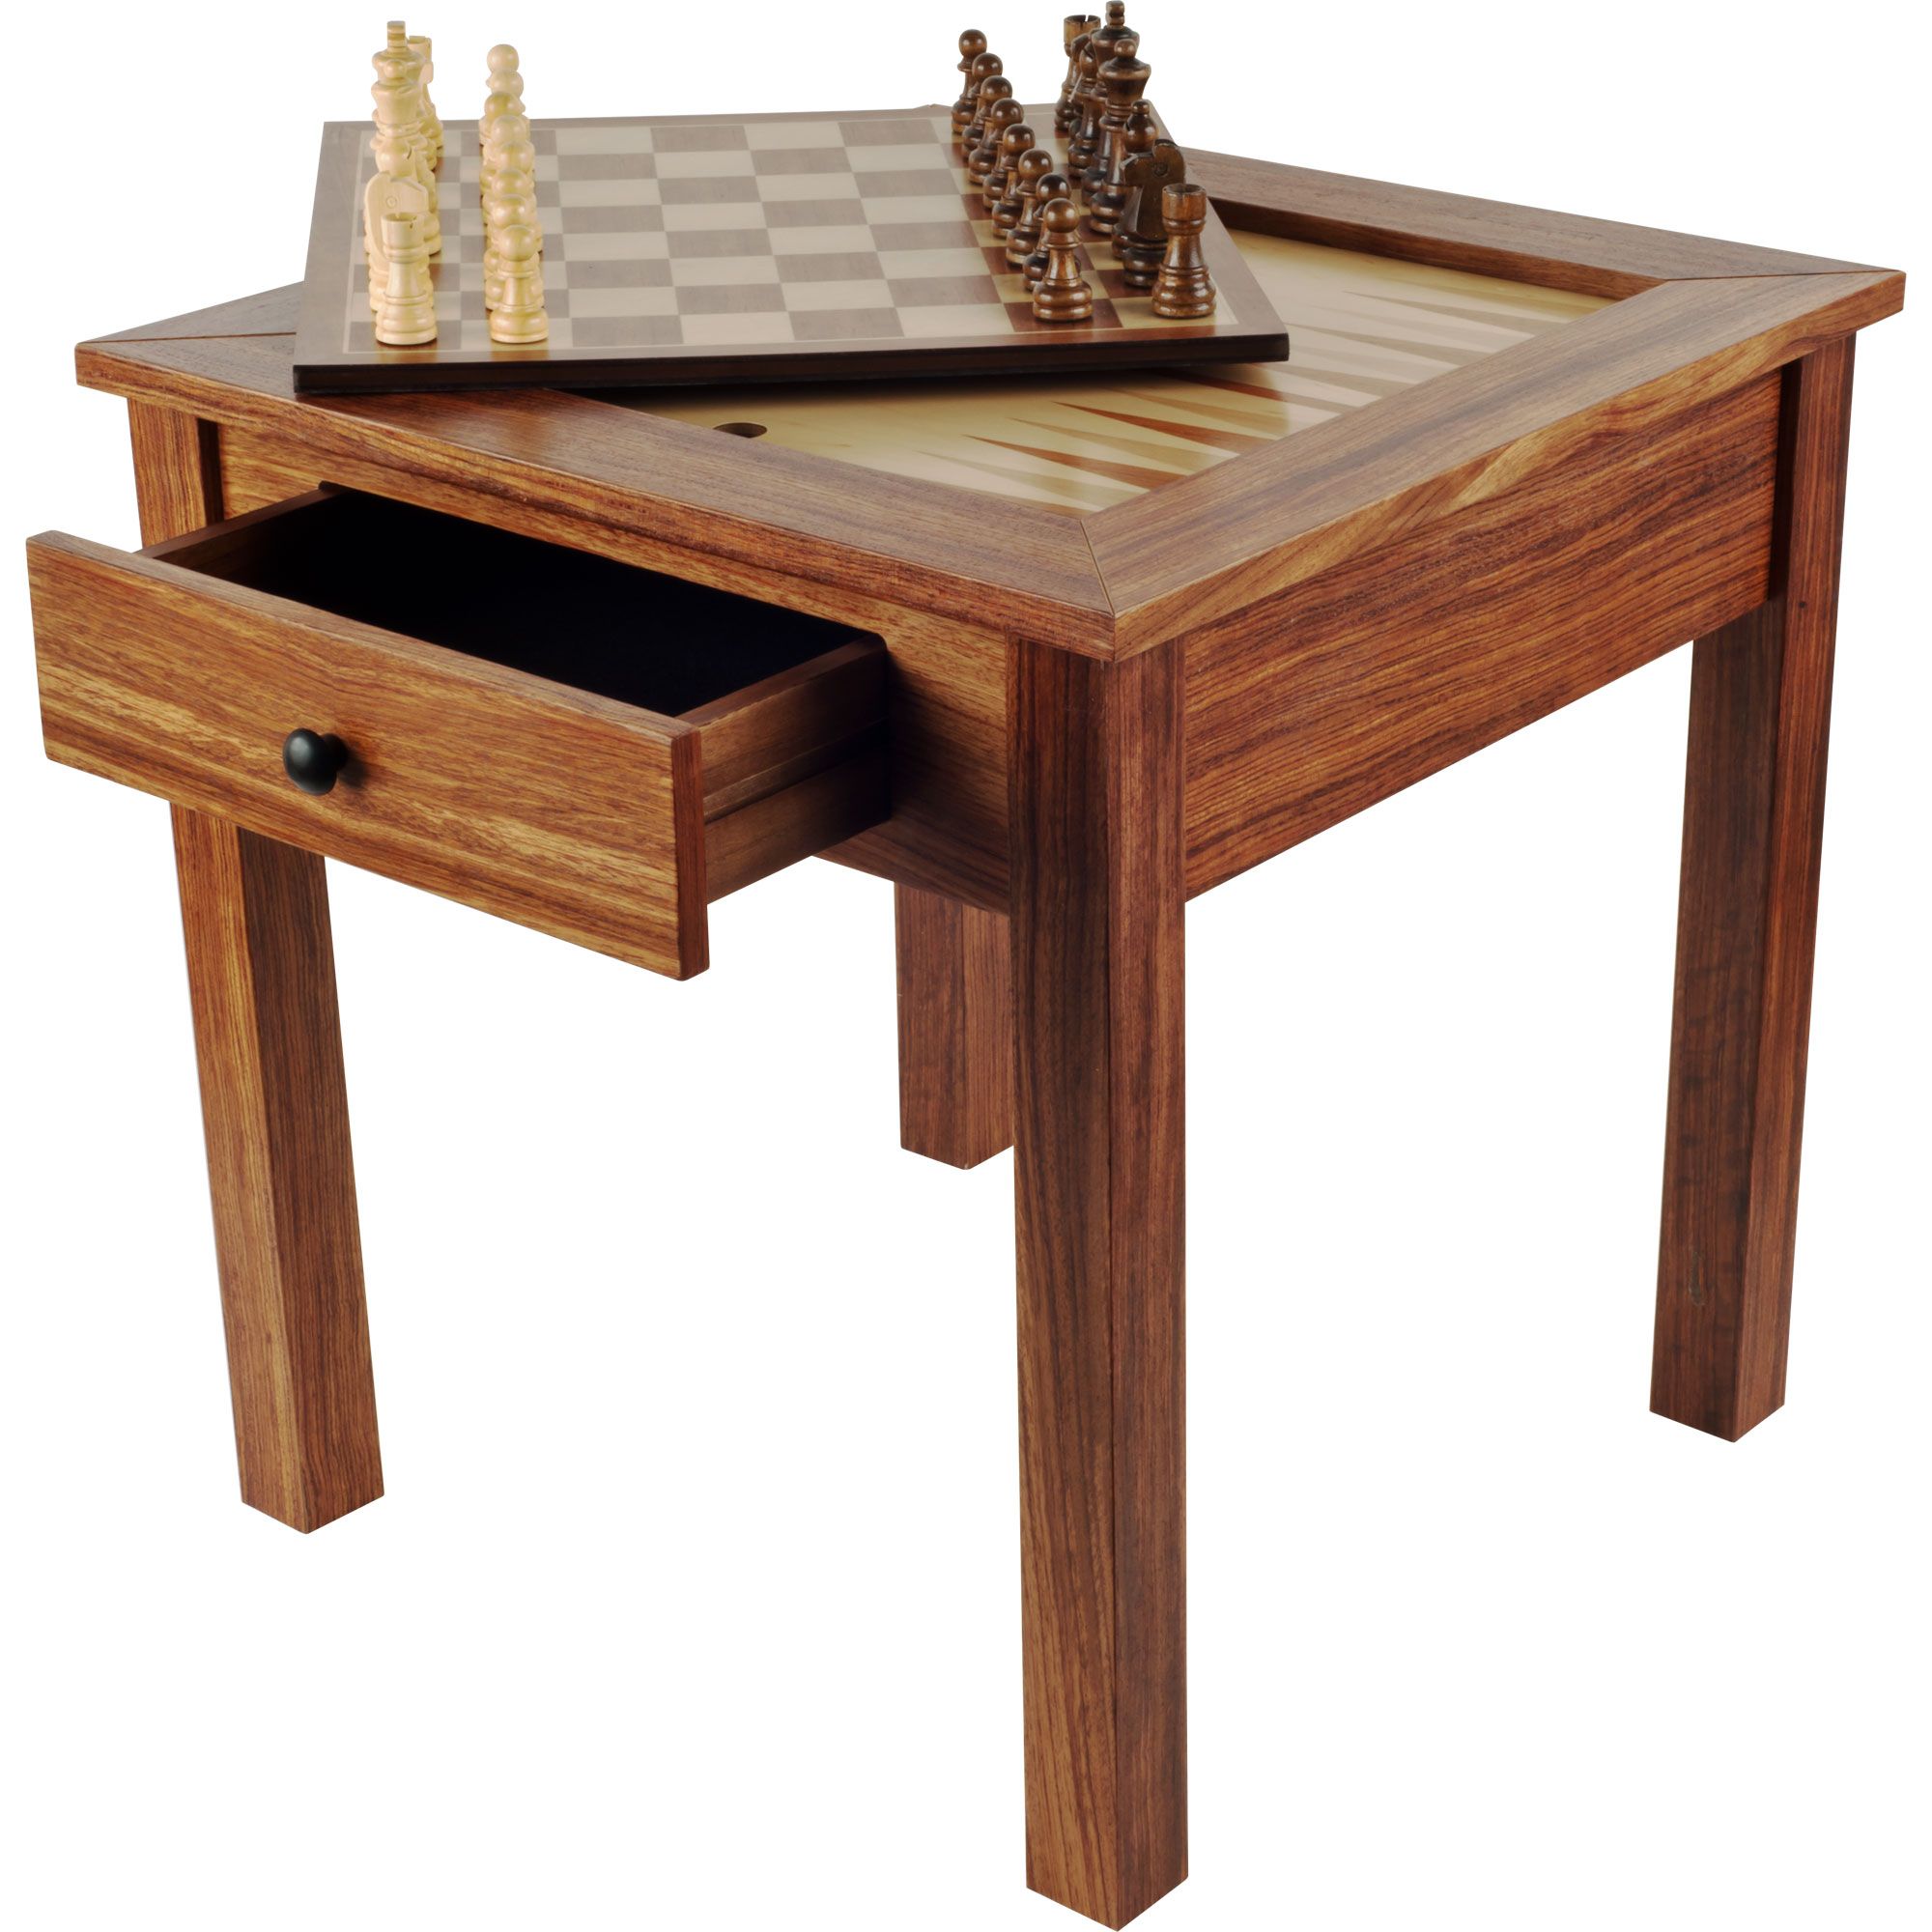 Trademark Global Wood 3 in 1 Chess Backgammon Table